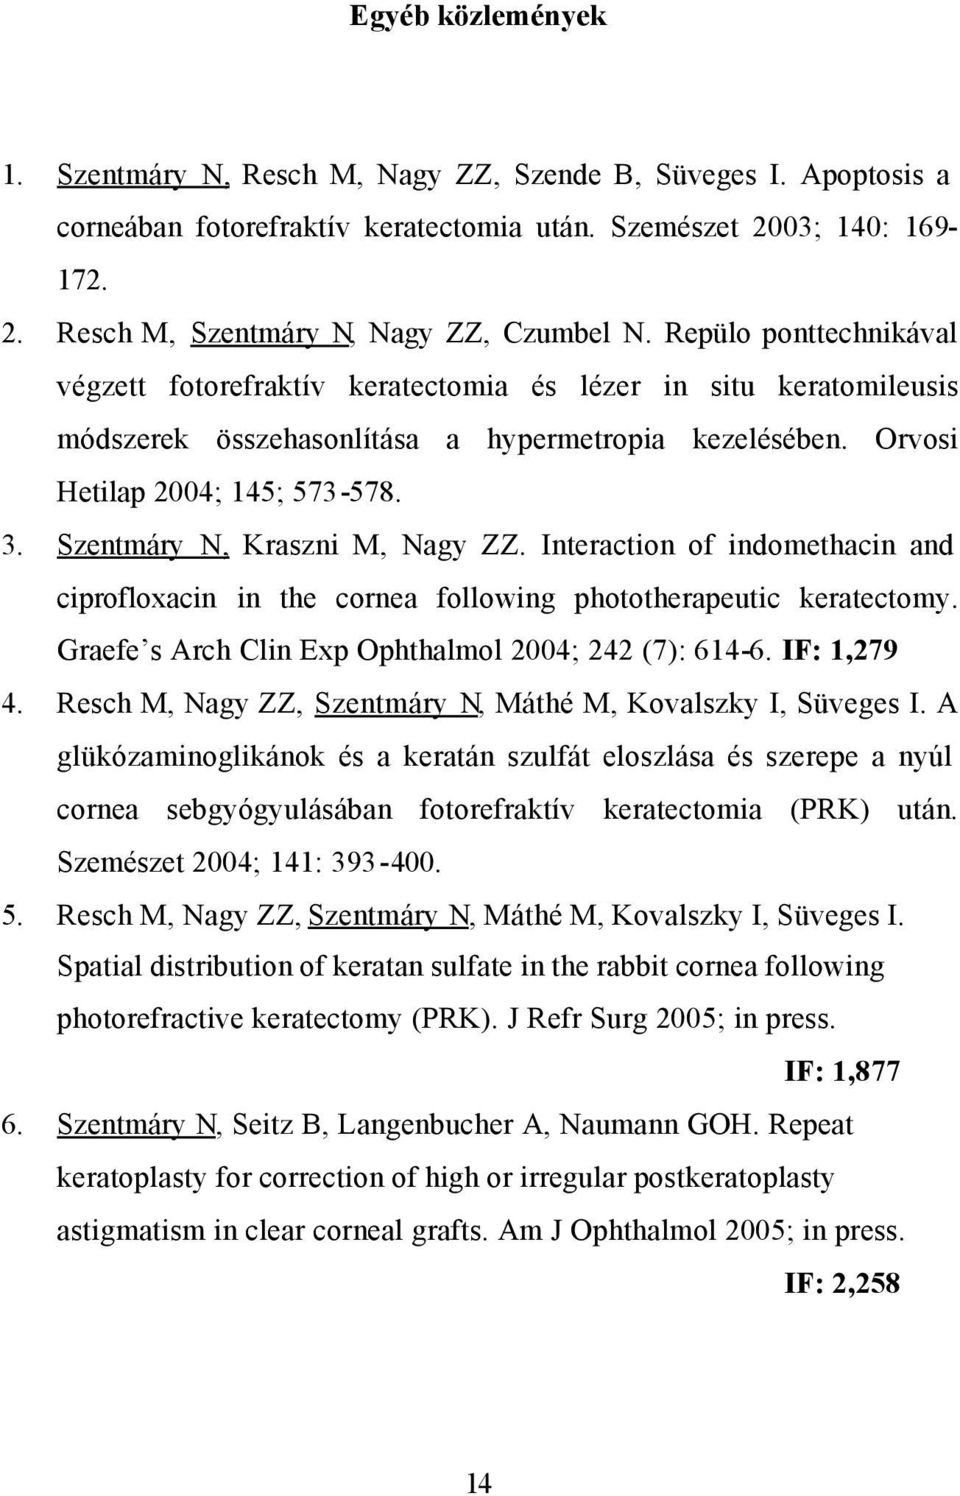 Szentmáry N, Kraszni M, Nagy ZZ. Interaction of indomethacin and ciprofloxacin in the cornea following phototherapeutic keratectomy. Graefe s Arch Clin Exp Ophthalmol 2004; 242 (7): 614-6.